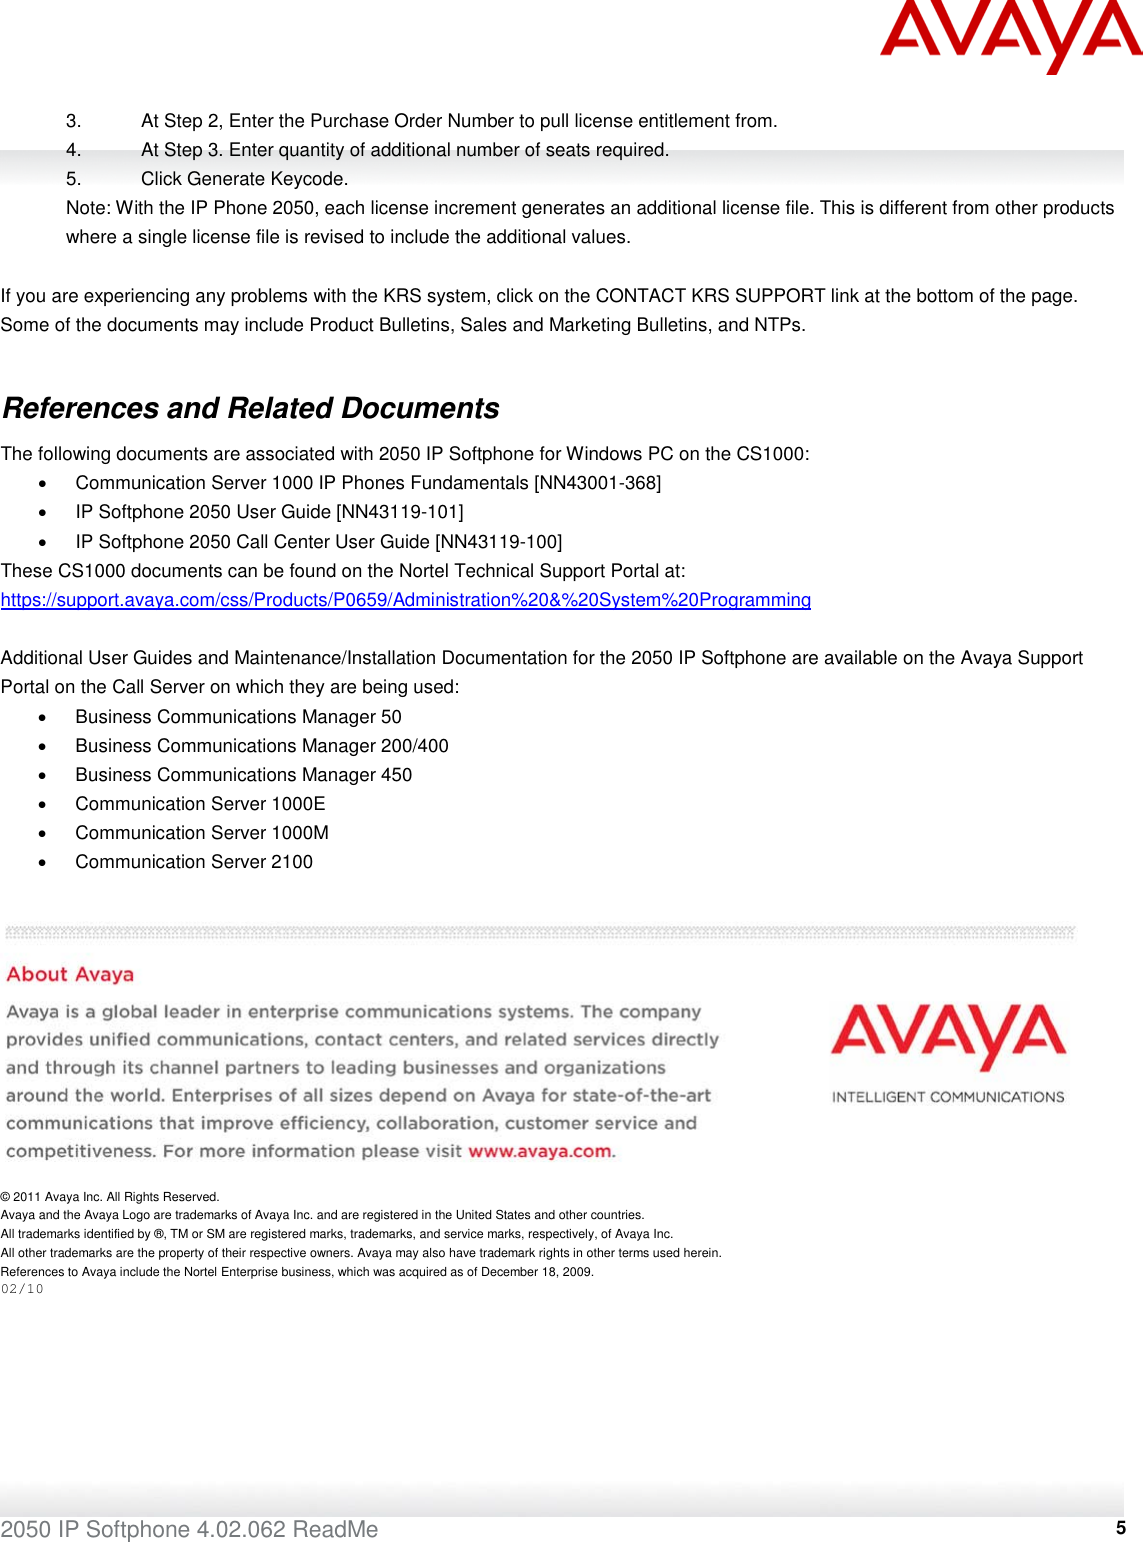 Page 5 of 5 - Avaya Avaya-2050-Ip-Softphone-For-Windows-Pc-4-02-062-Users-Manual- ReadMe - 2050 V4.02.62  Avaya-2050-ip-softphone-for-windows-pc-4-02-062-users-manual